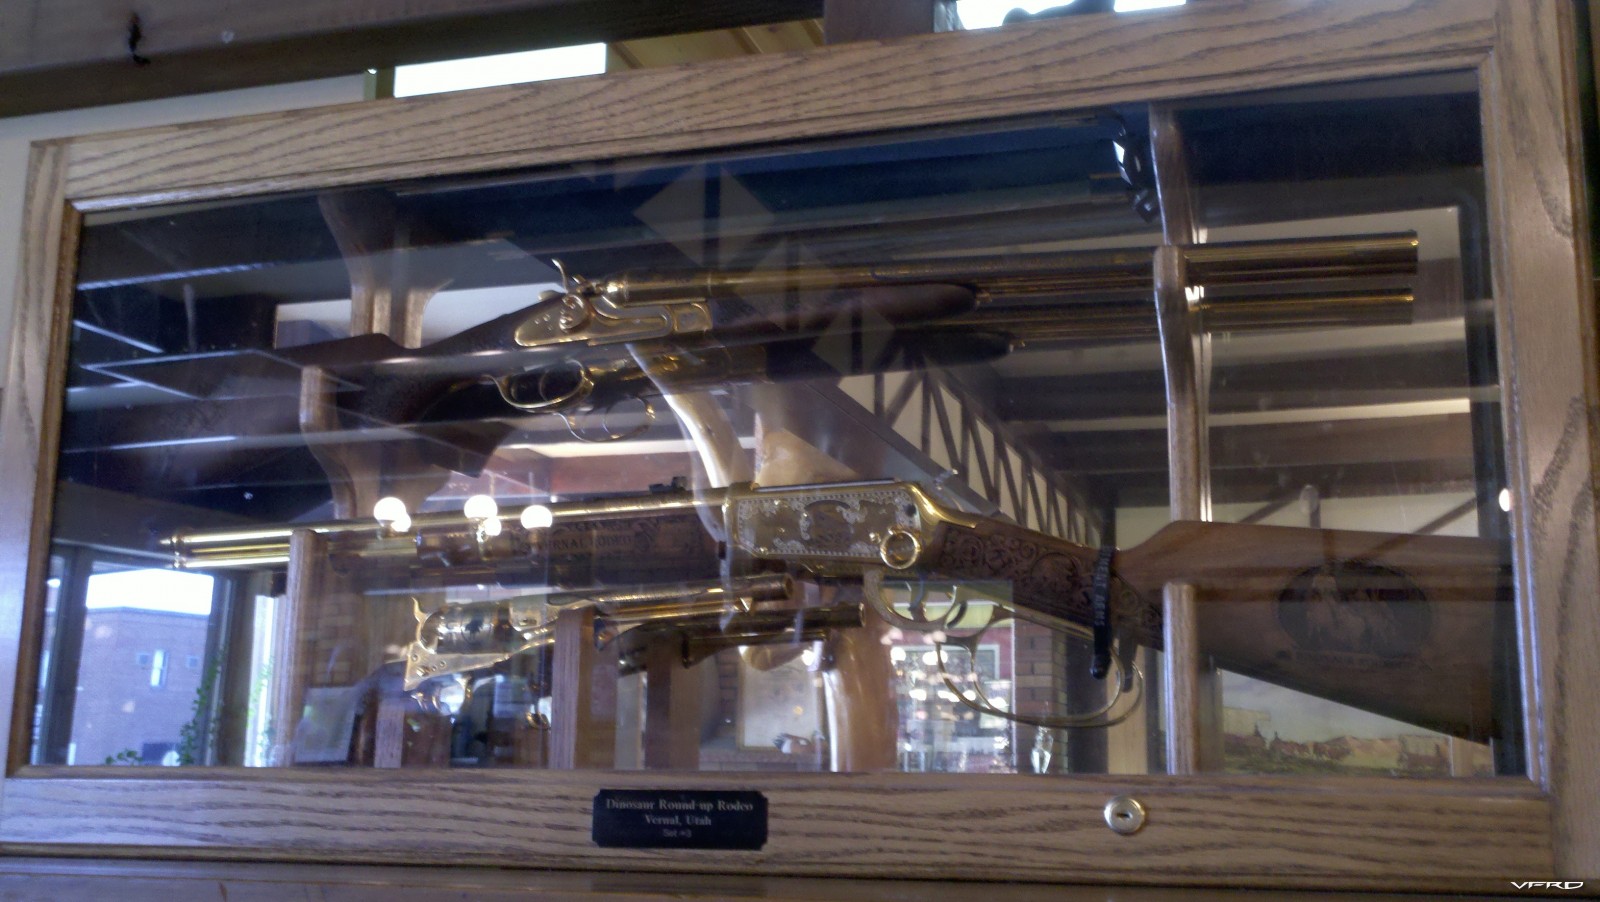 Custom hand engraved guns on display